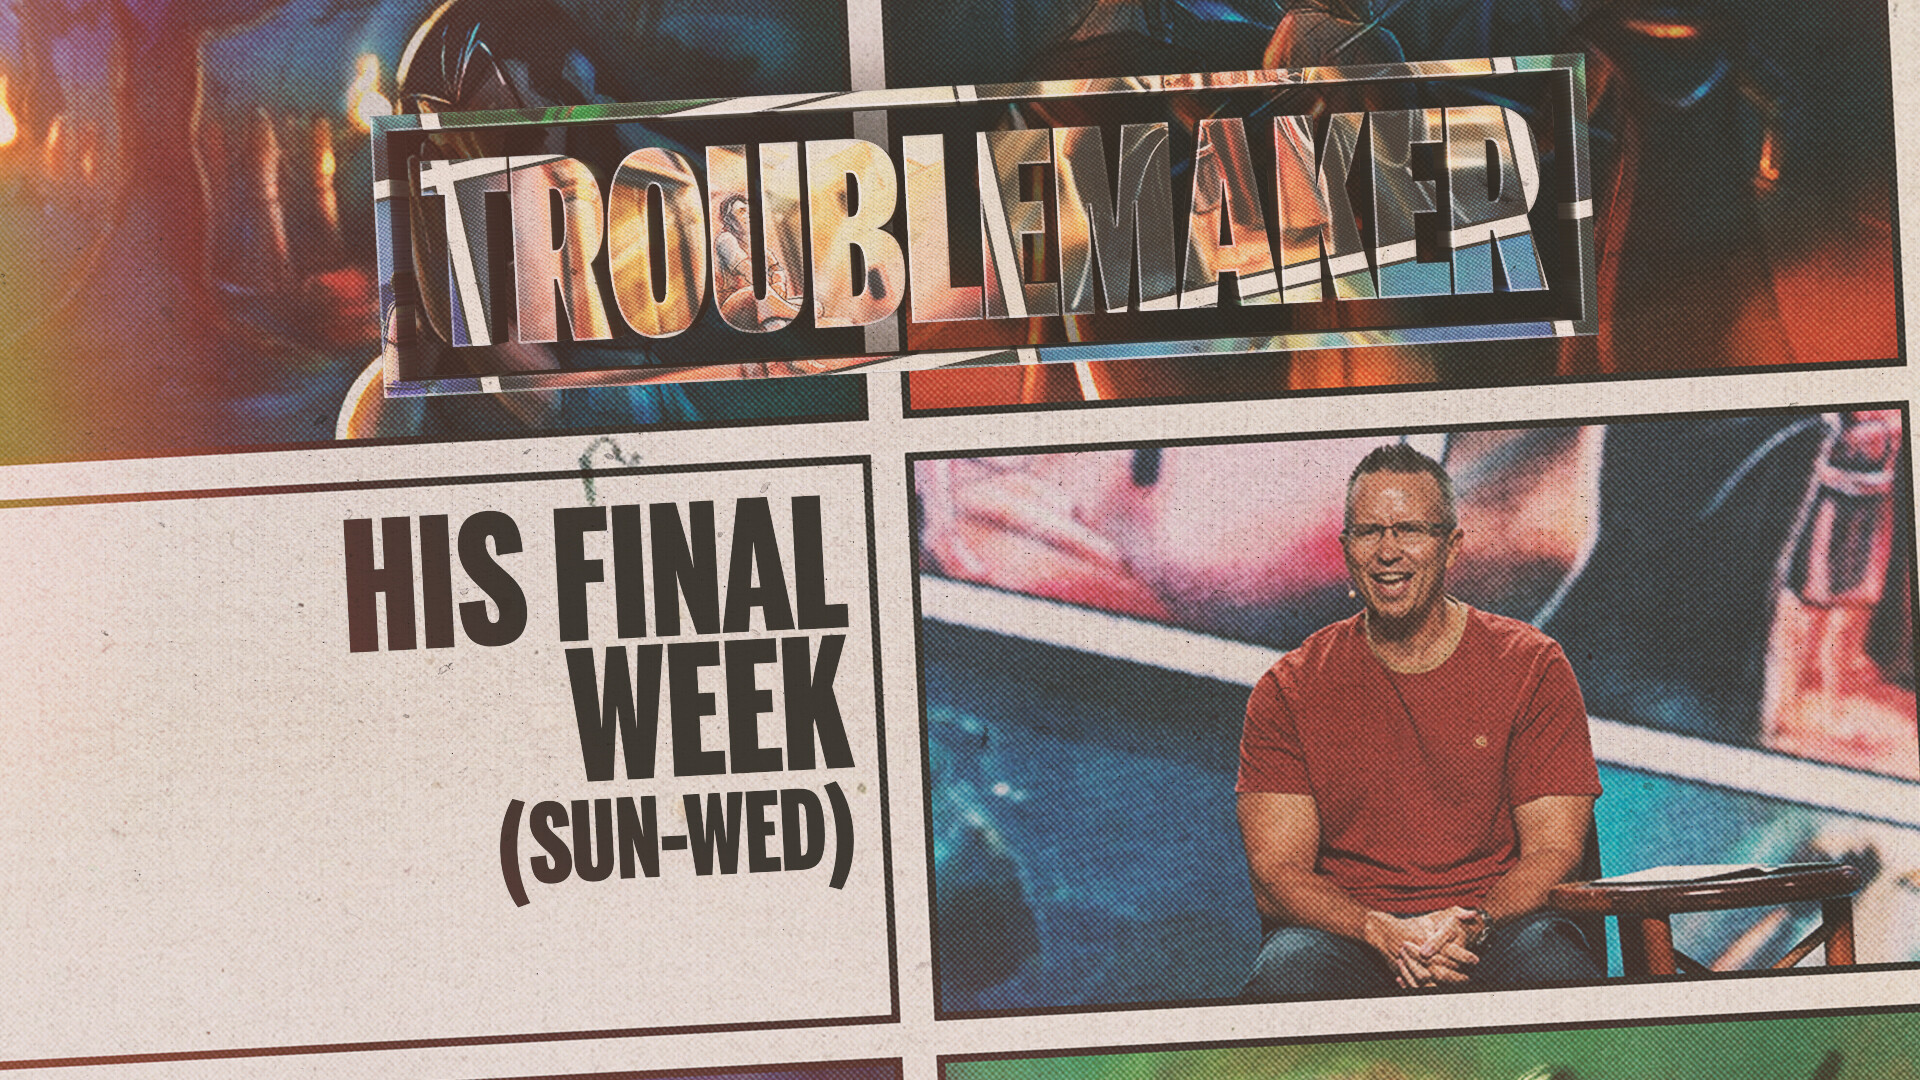 Watch Troublemaker - His Final Week (Sun-Wed)